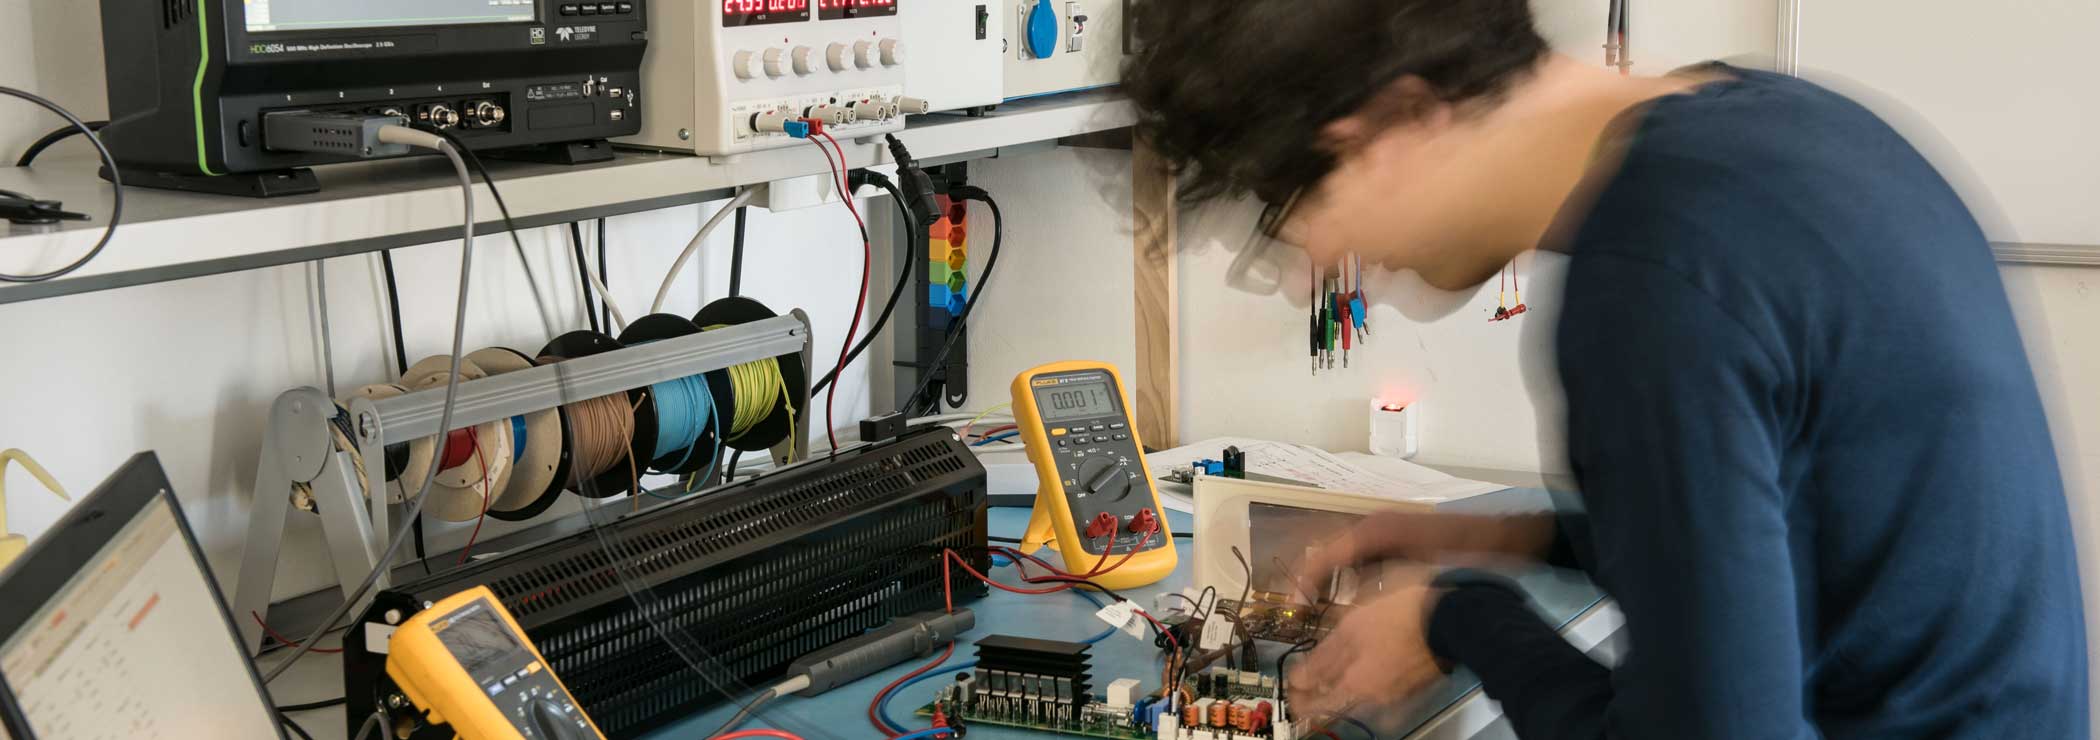 Engineer tests an electronic circuit